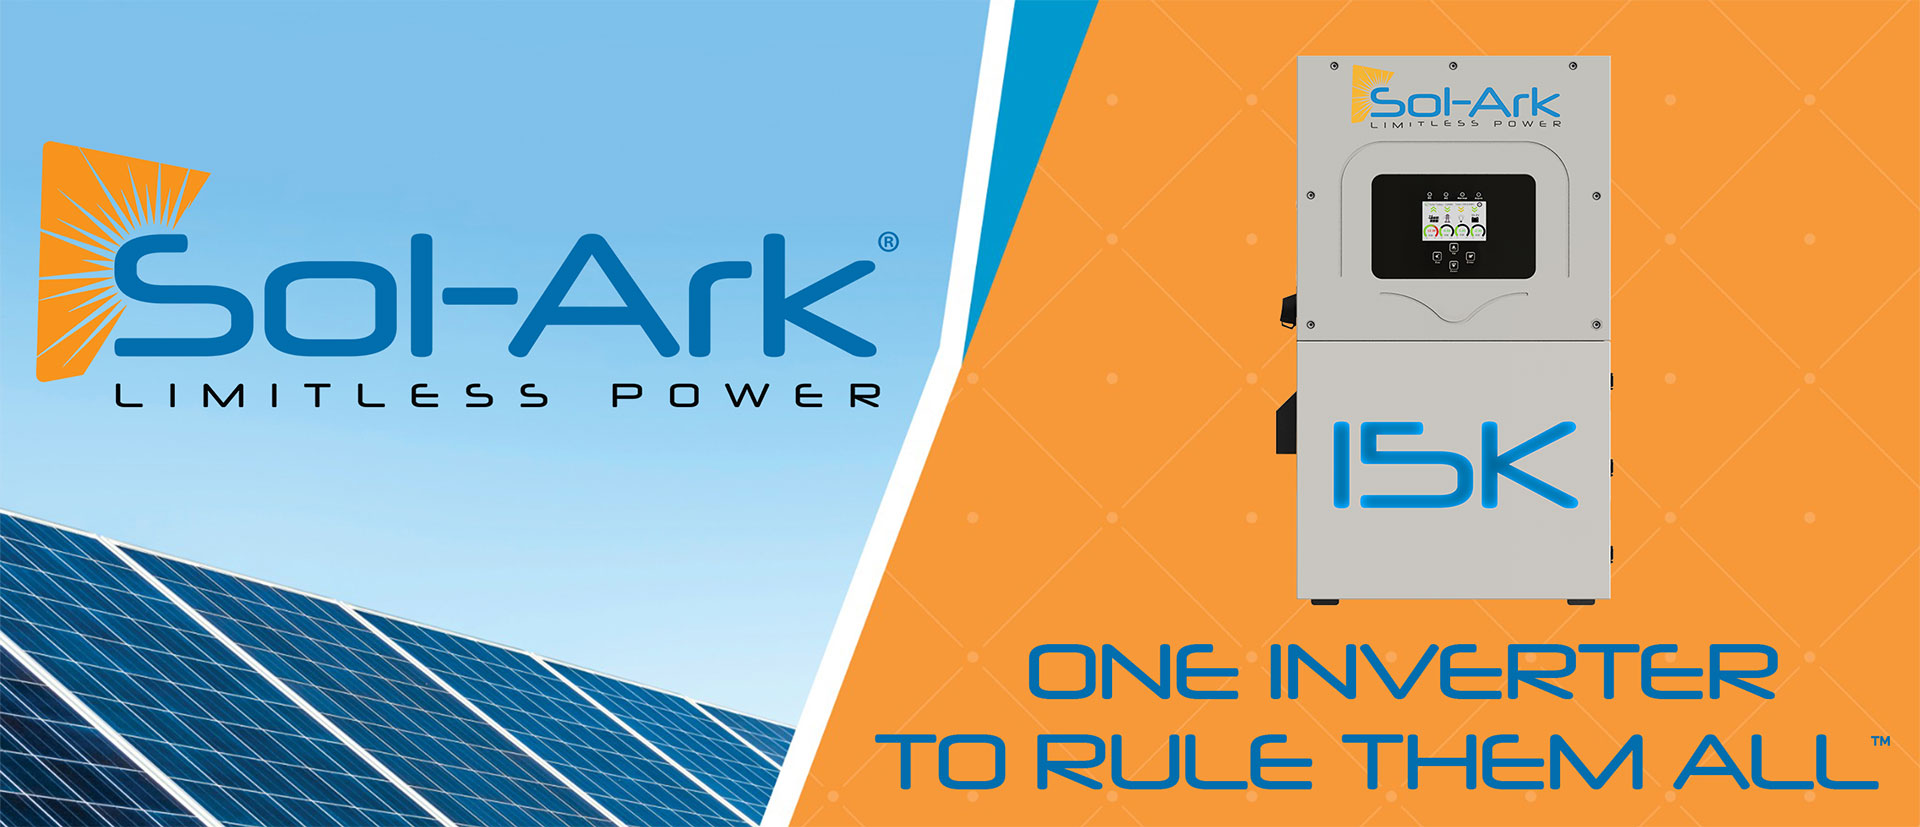 sol-ark-banner-renew-solar-solutions